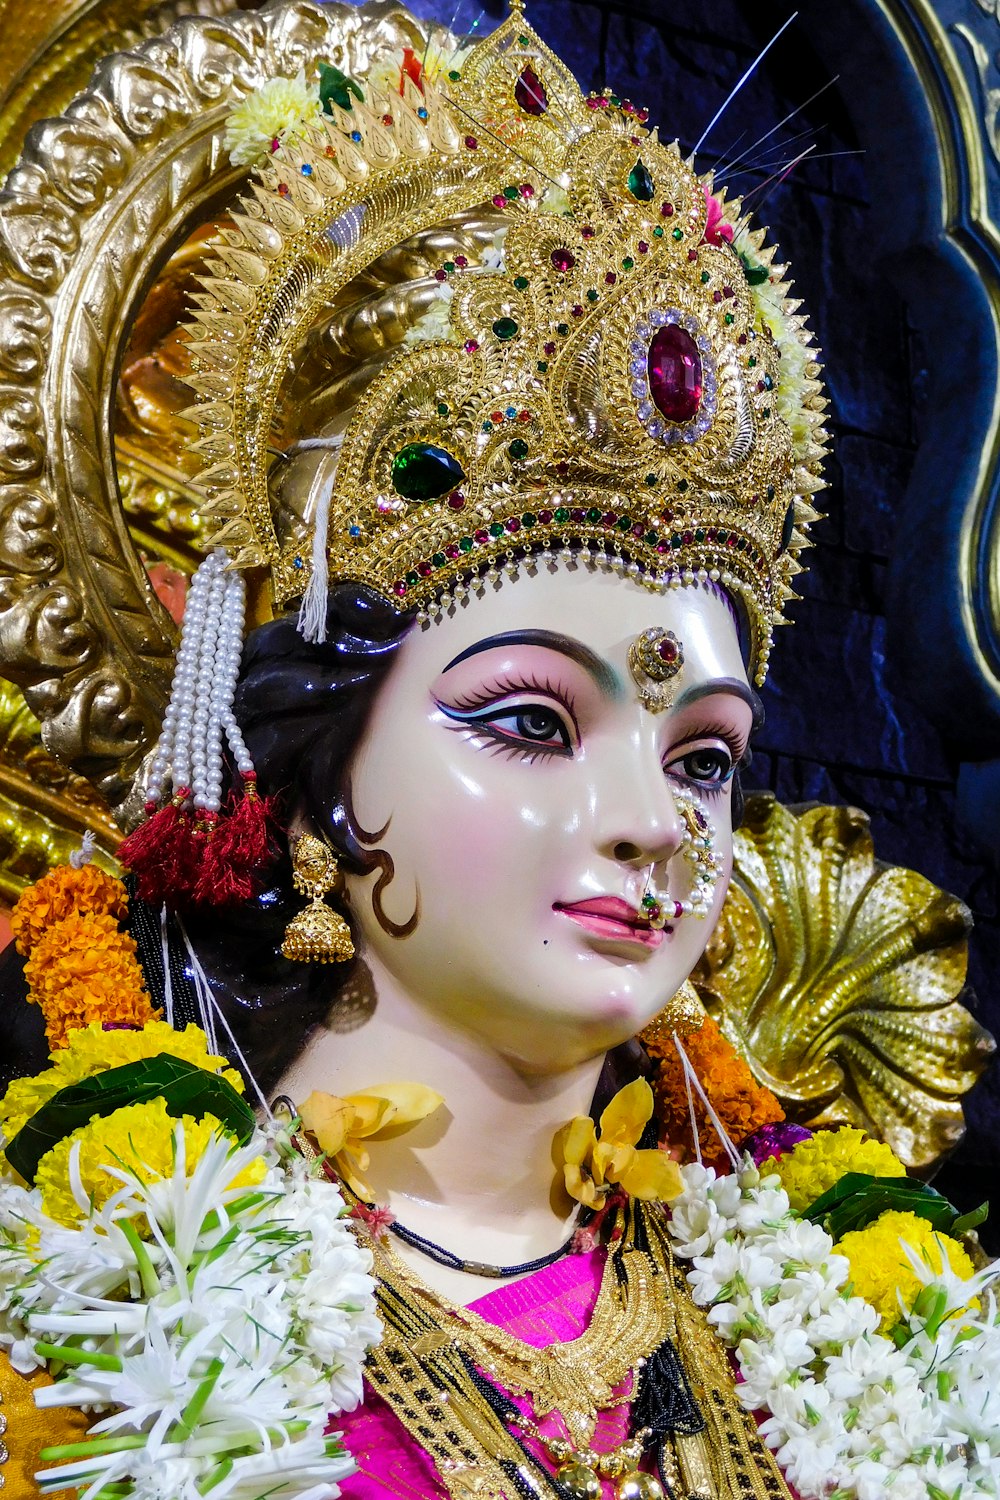 Durga Devi Pictures | Download Free Images on Unsplash